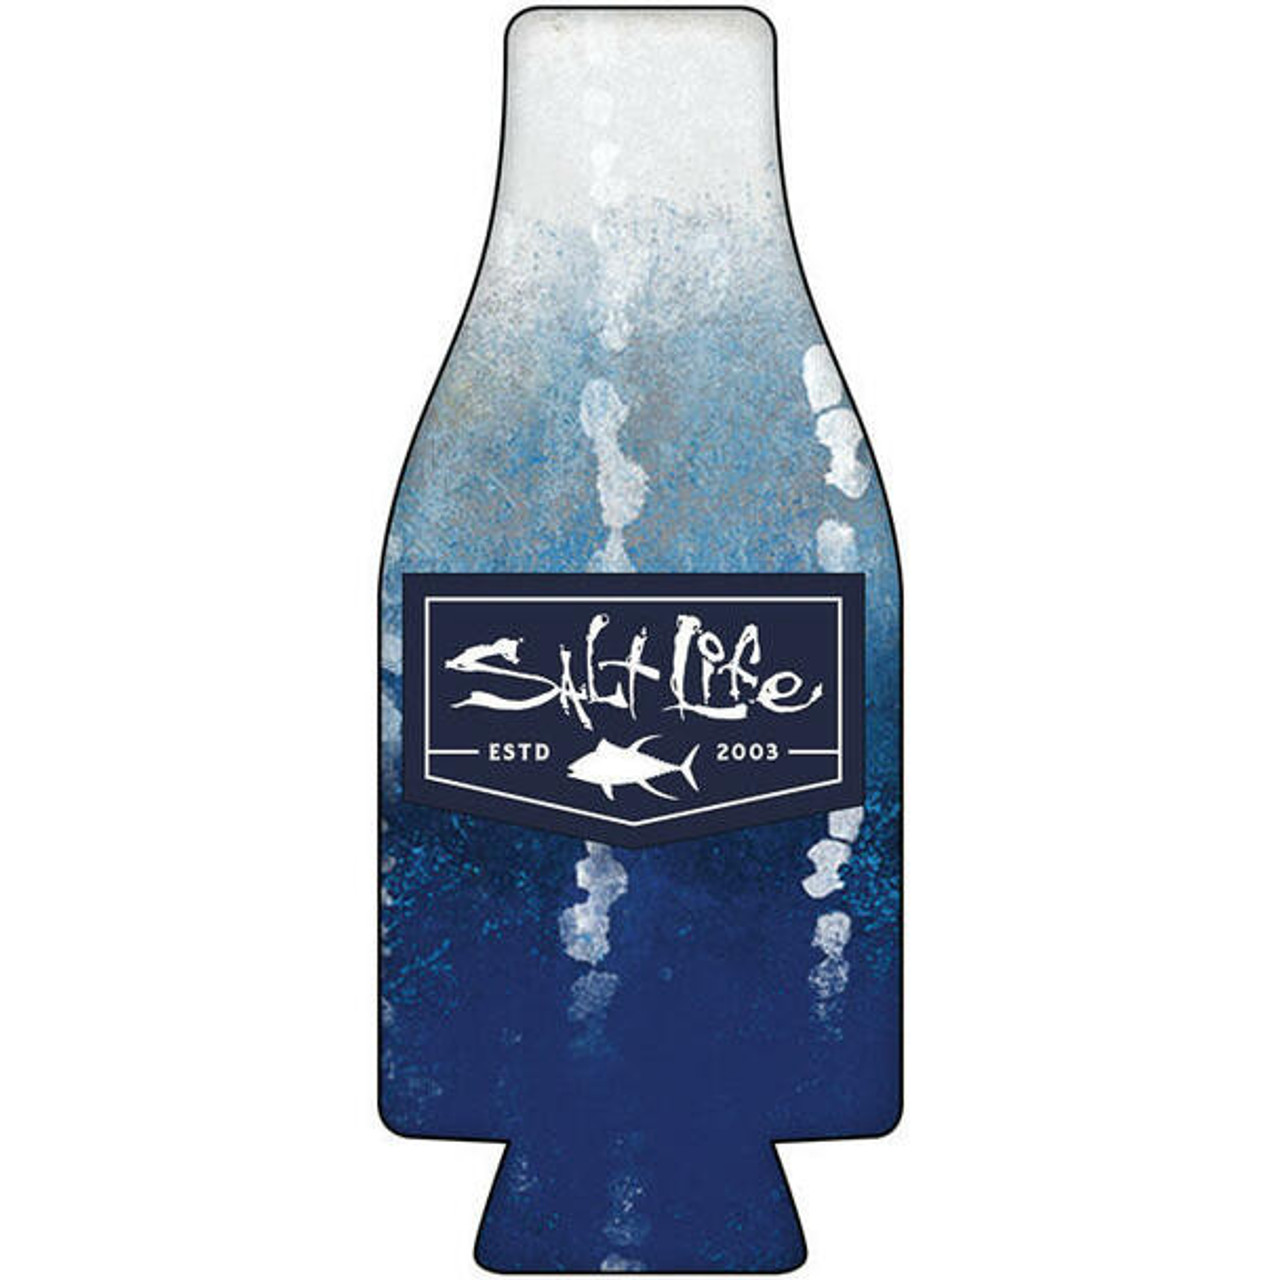 Salt Life® Marlin Fade Bottle Holder